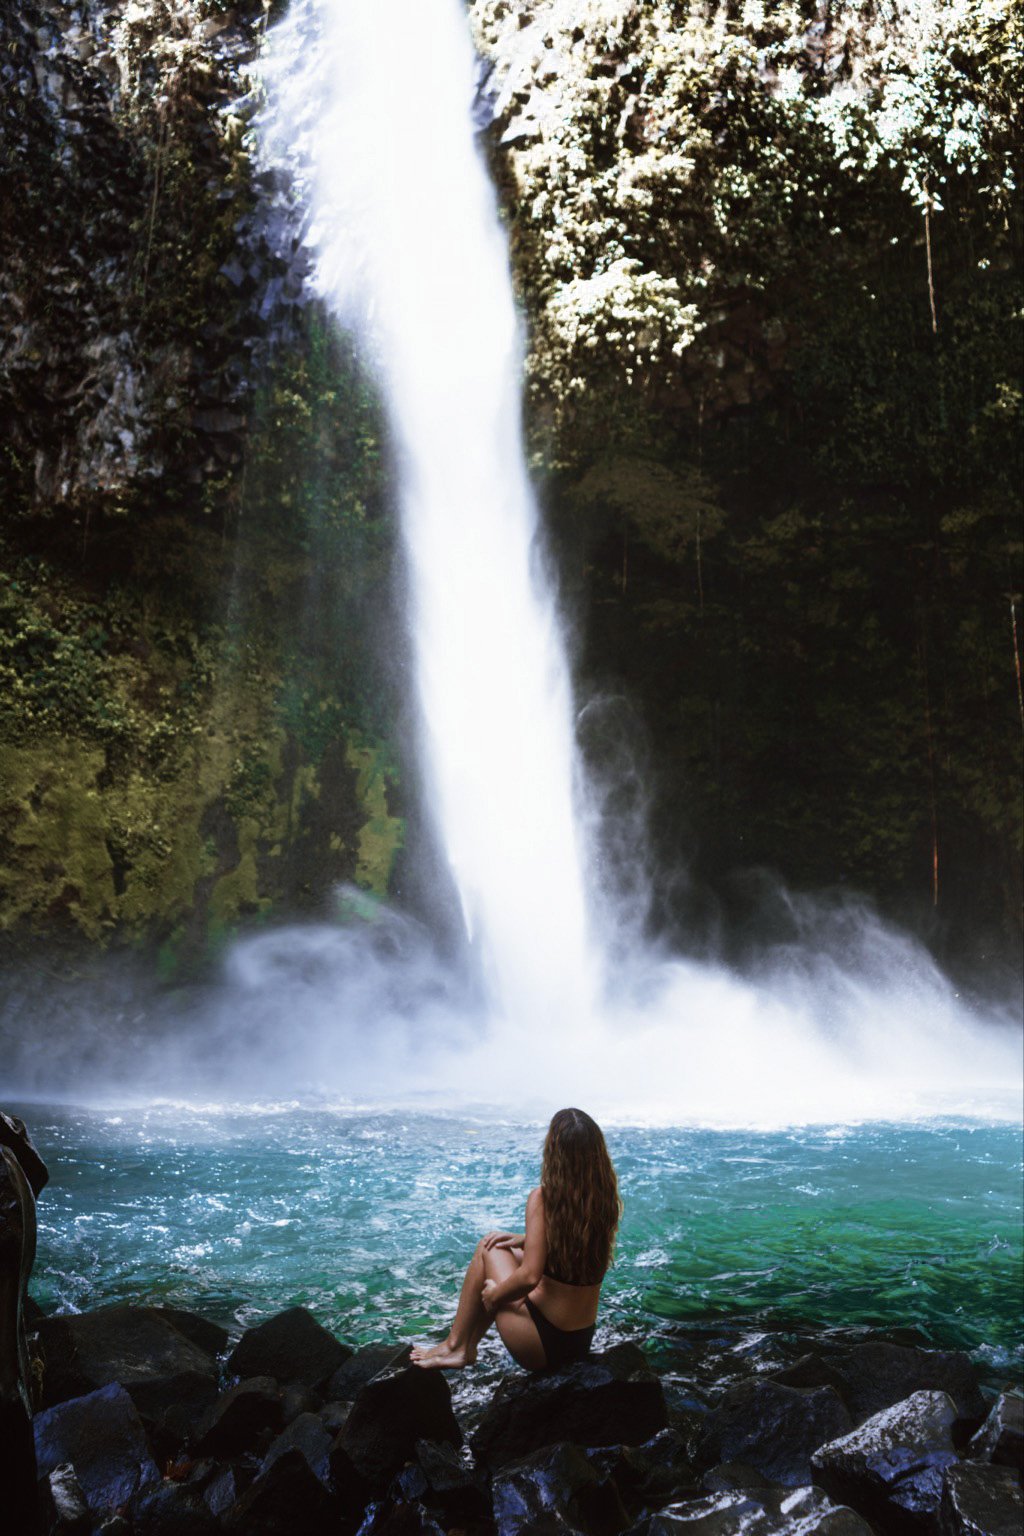 Río Celeste waterfall, La Fortuna, Costa Rica